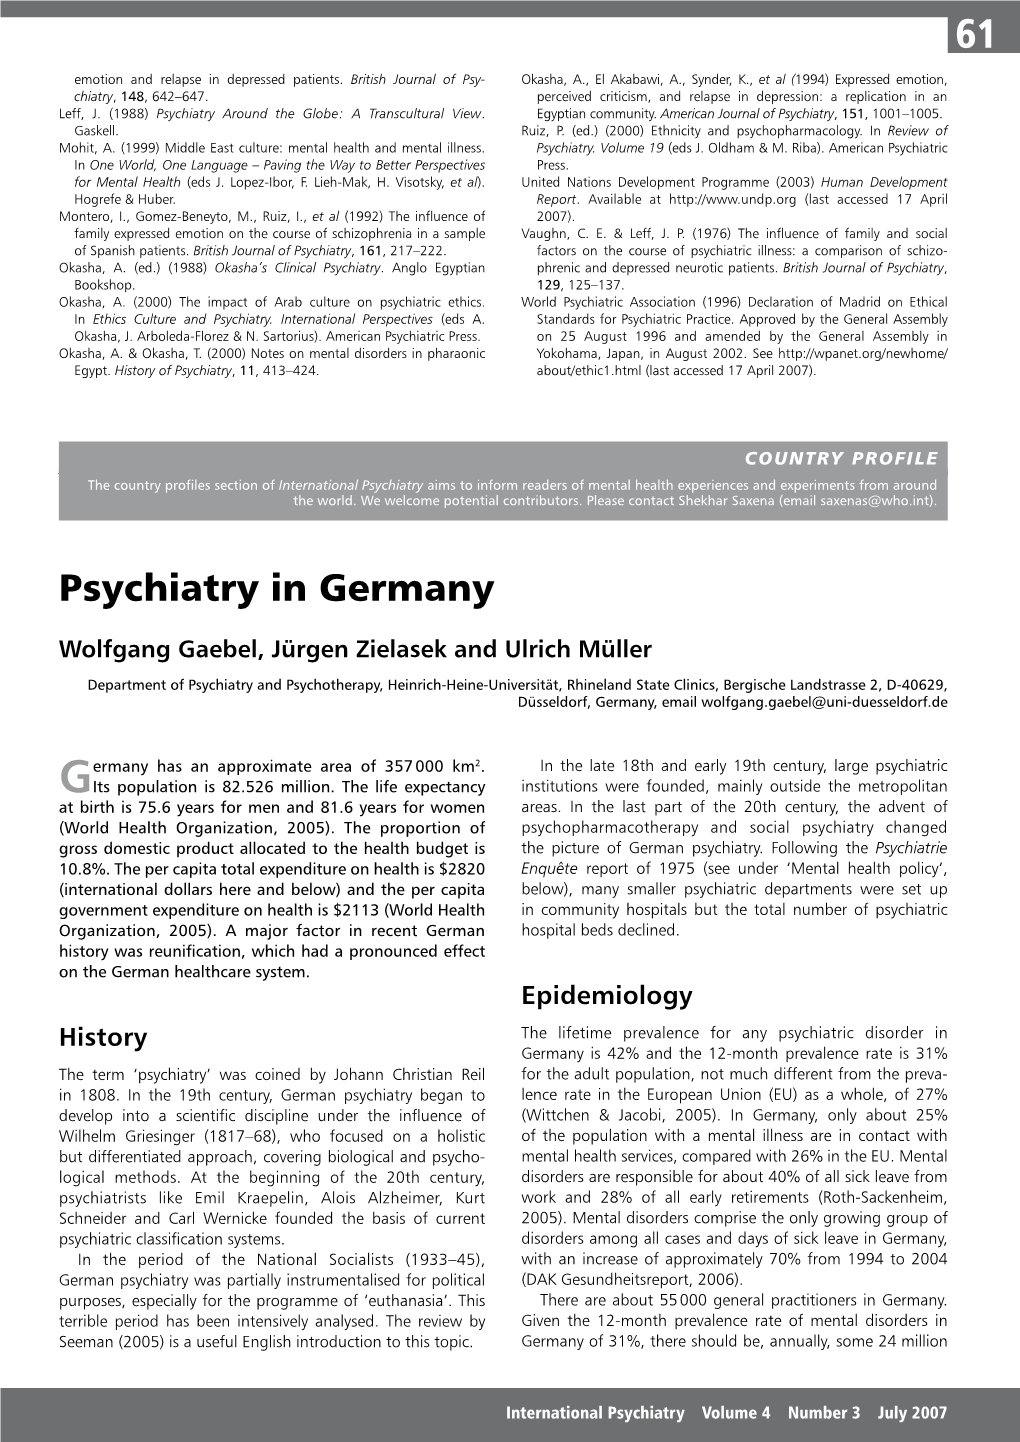 Psychiatry in Germany